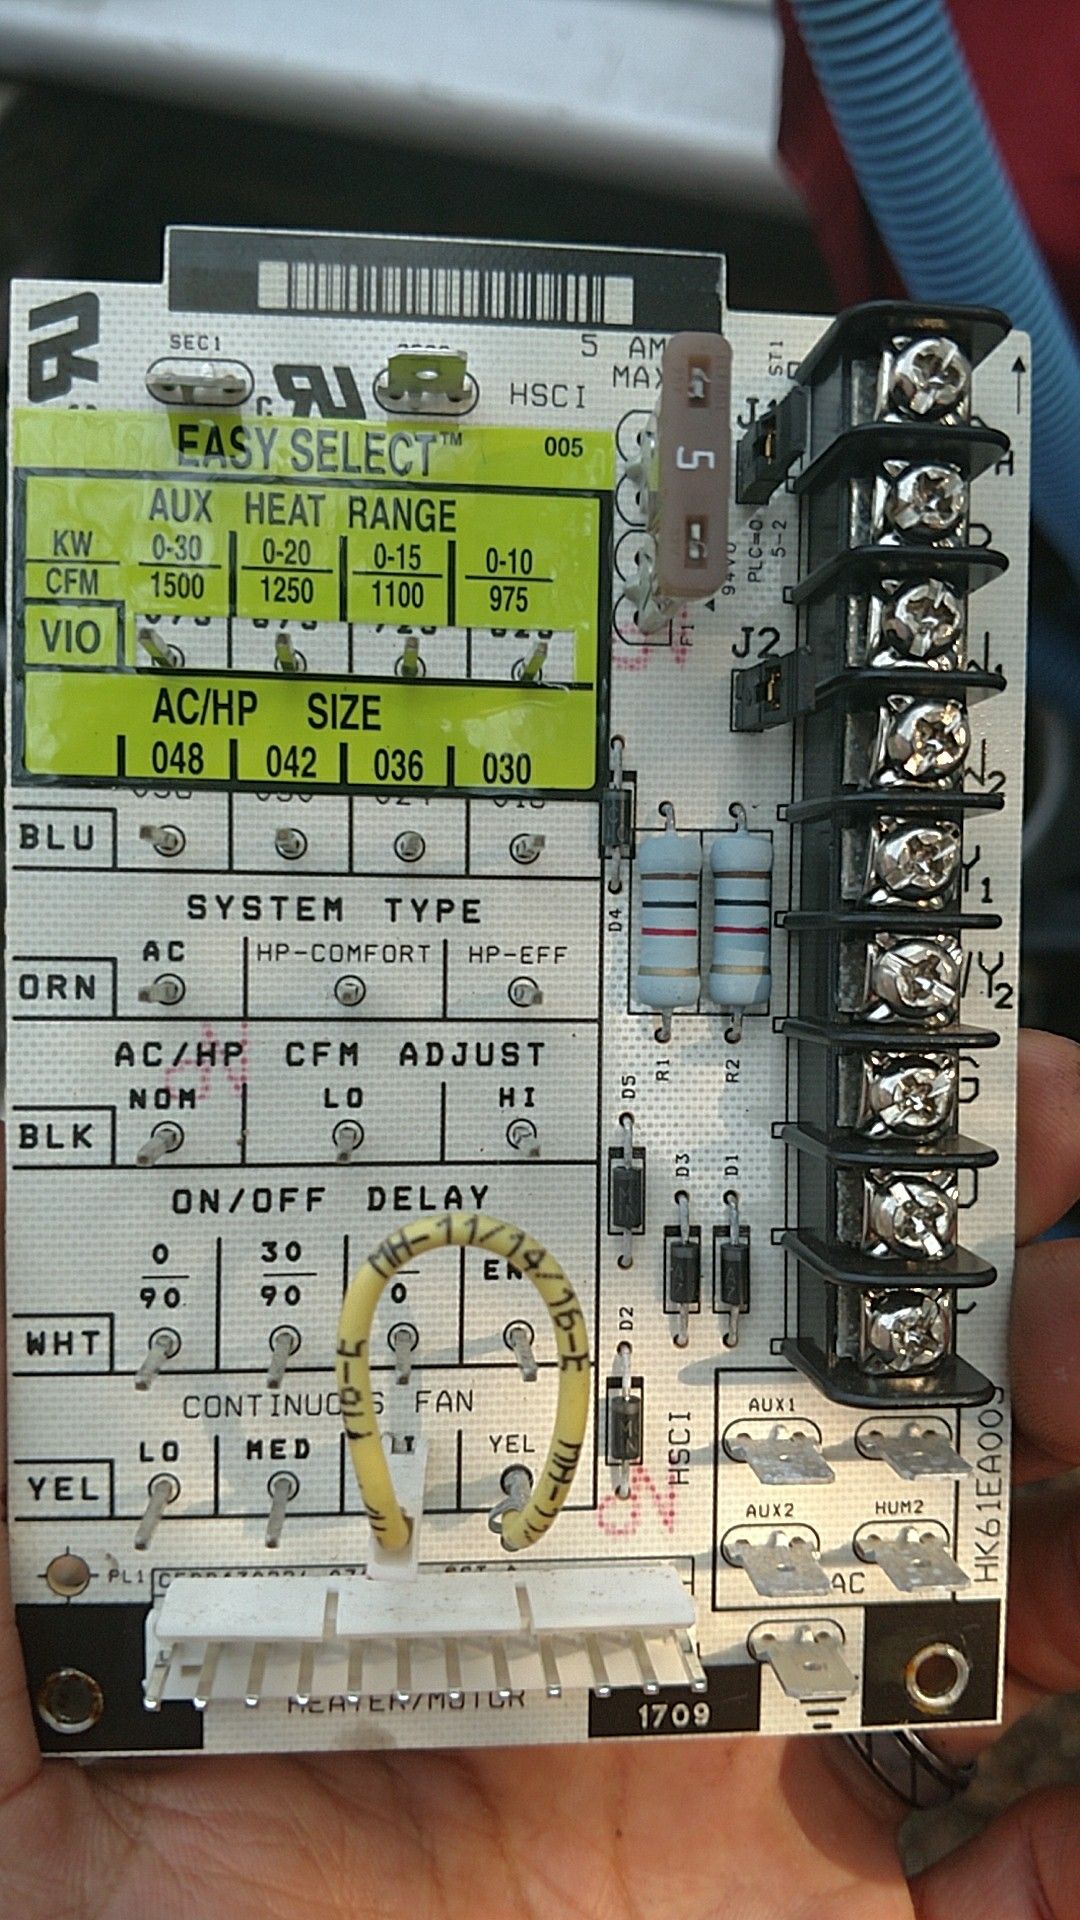 Hk61EA005 circuit board